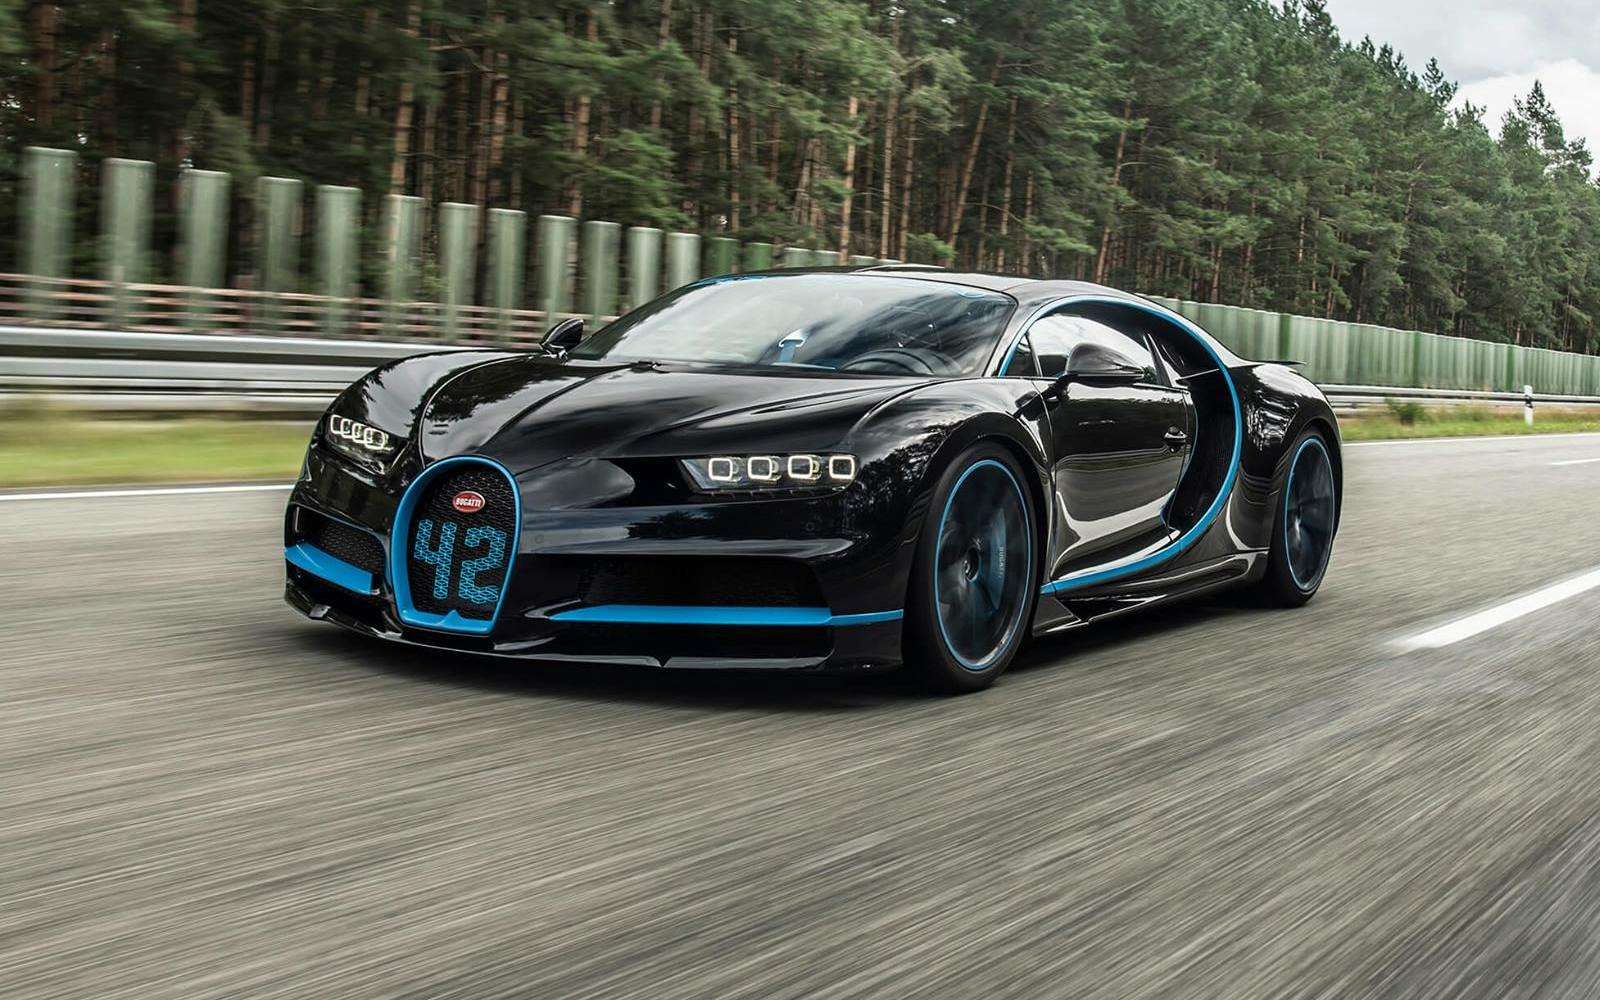 0-400-0 км/ч — видео рекордного заезда Bugatti Chiron — фото 794897